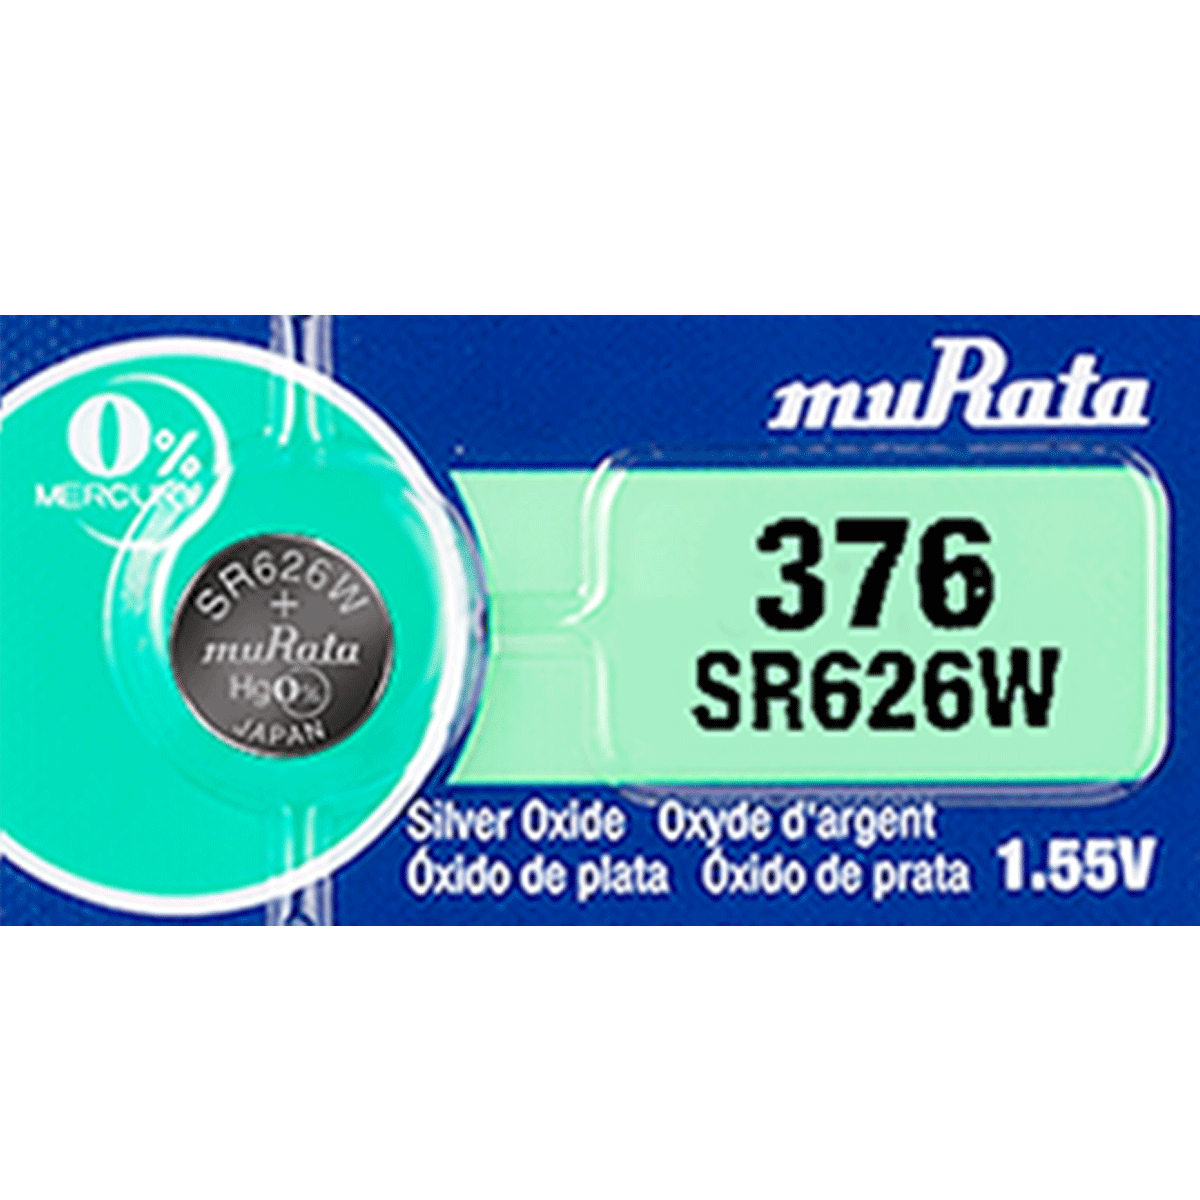 Murata Pile Bouton SR626SW / 377, 0% Mercure